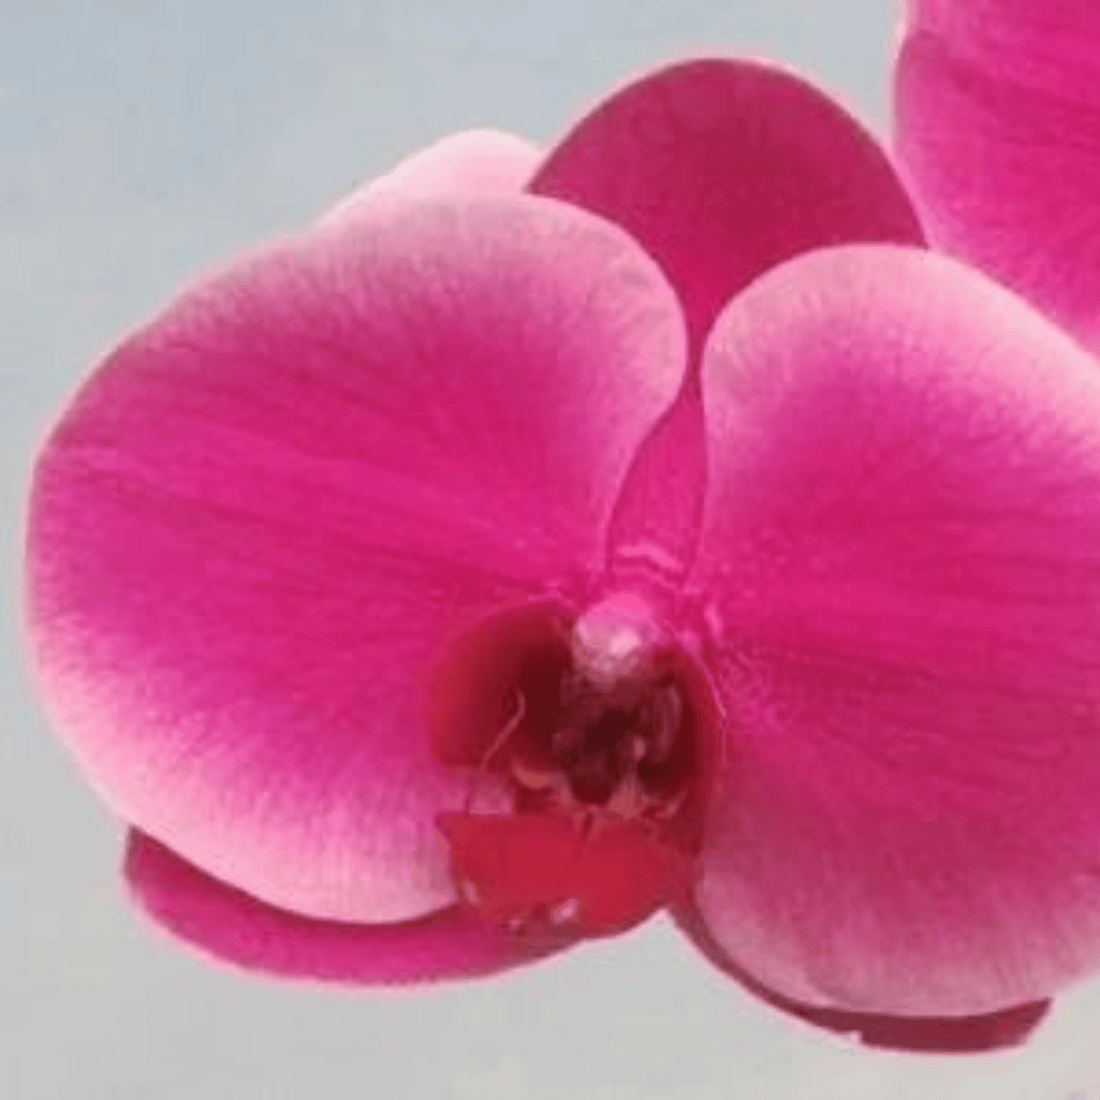 Doritaenopsis Shiuhdong Sweet Heart X Fuller’s Coke) - Blooming Size